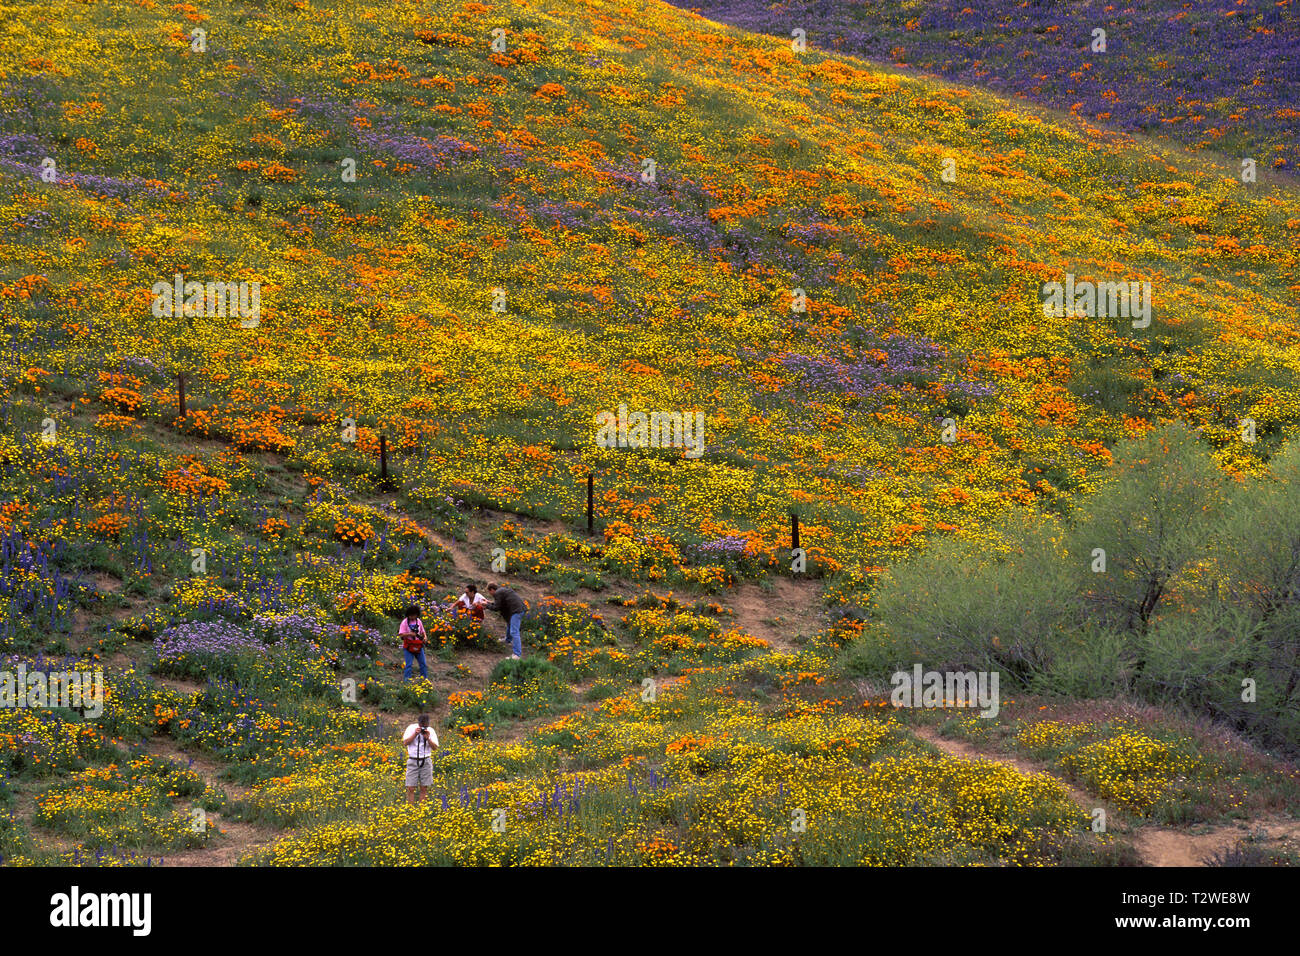 California poppies Eschscholtzia californica 'Super bloom' in the hills of southern California Stock Photo